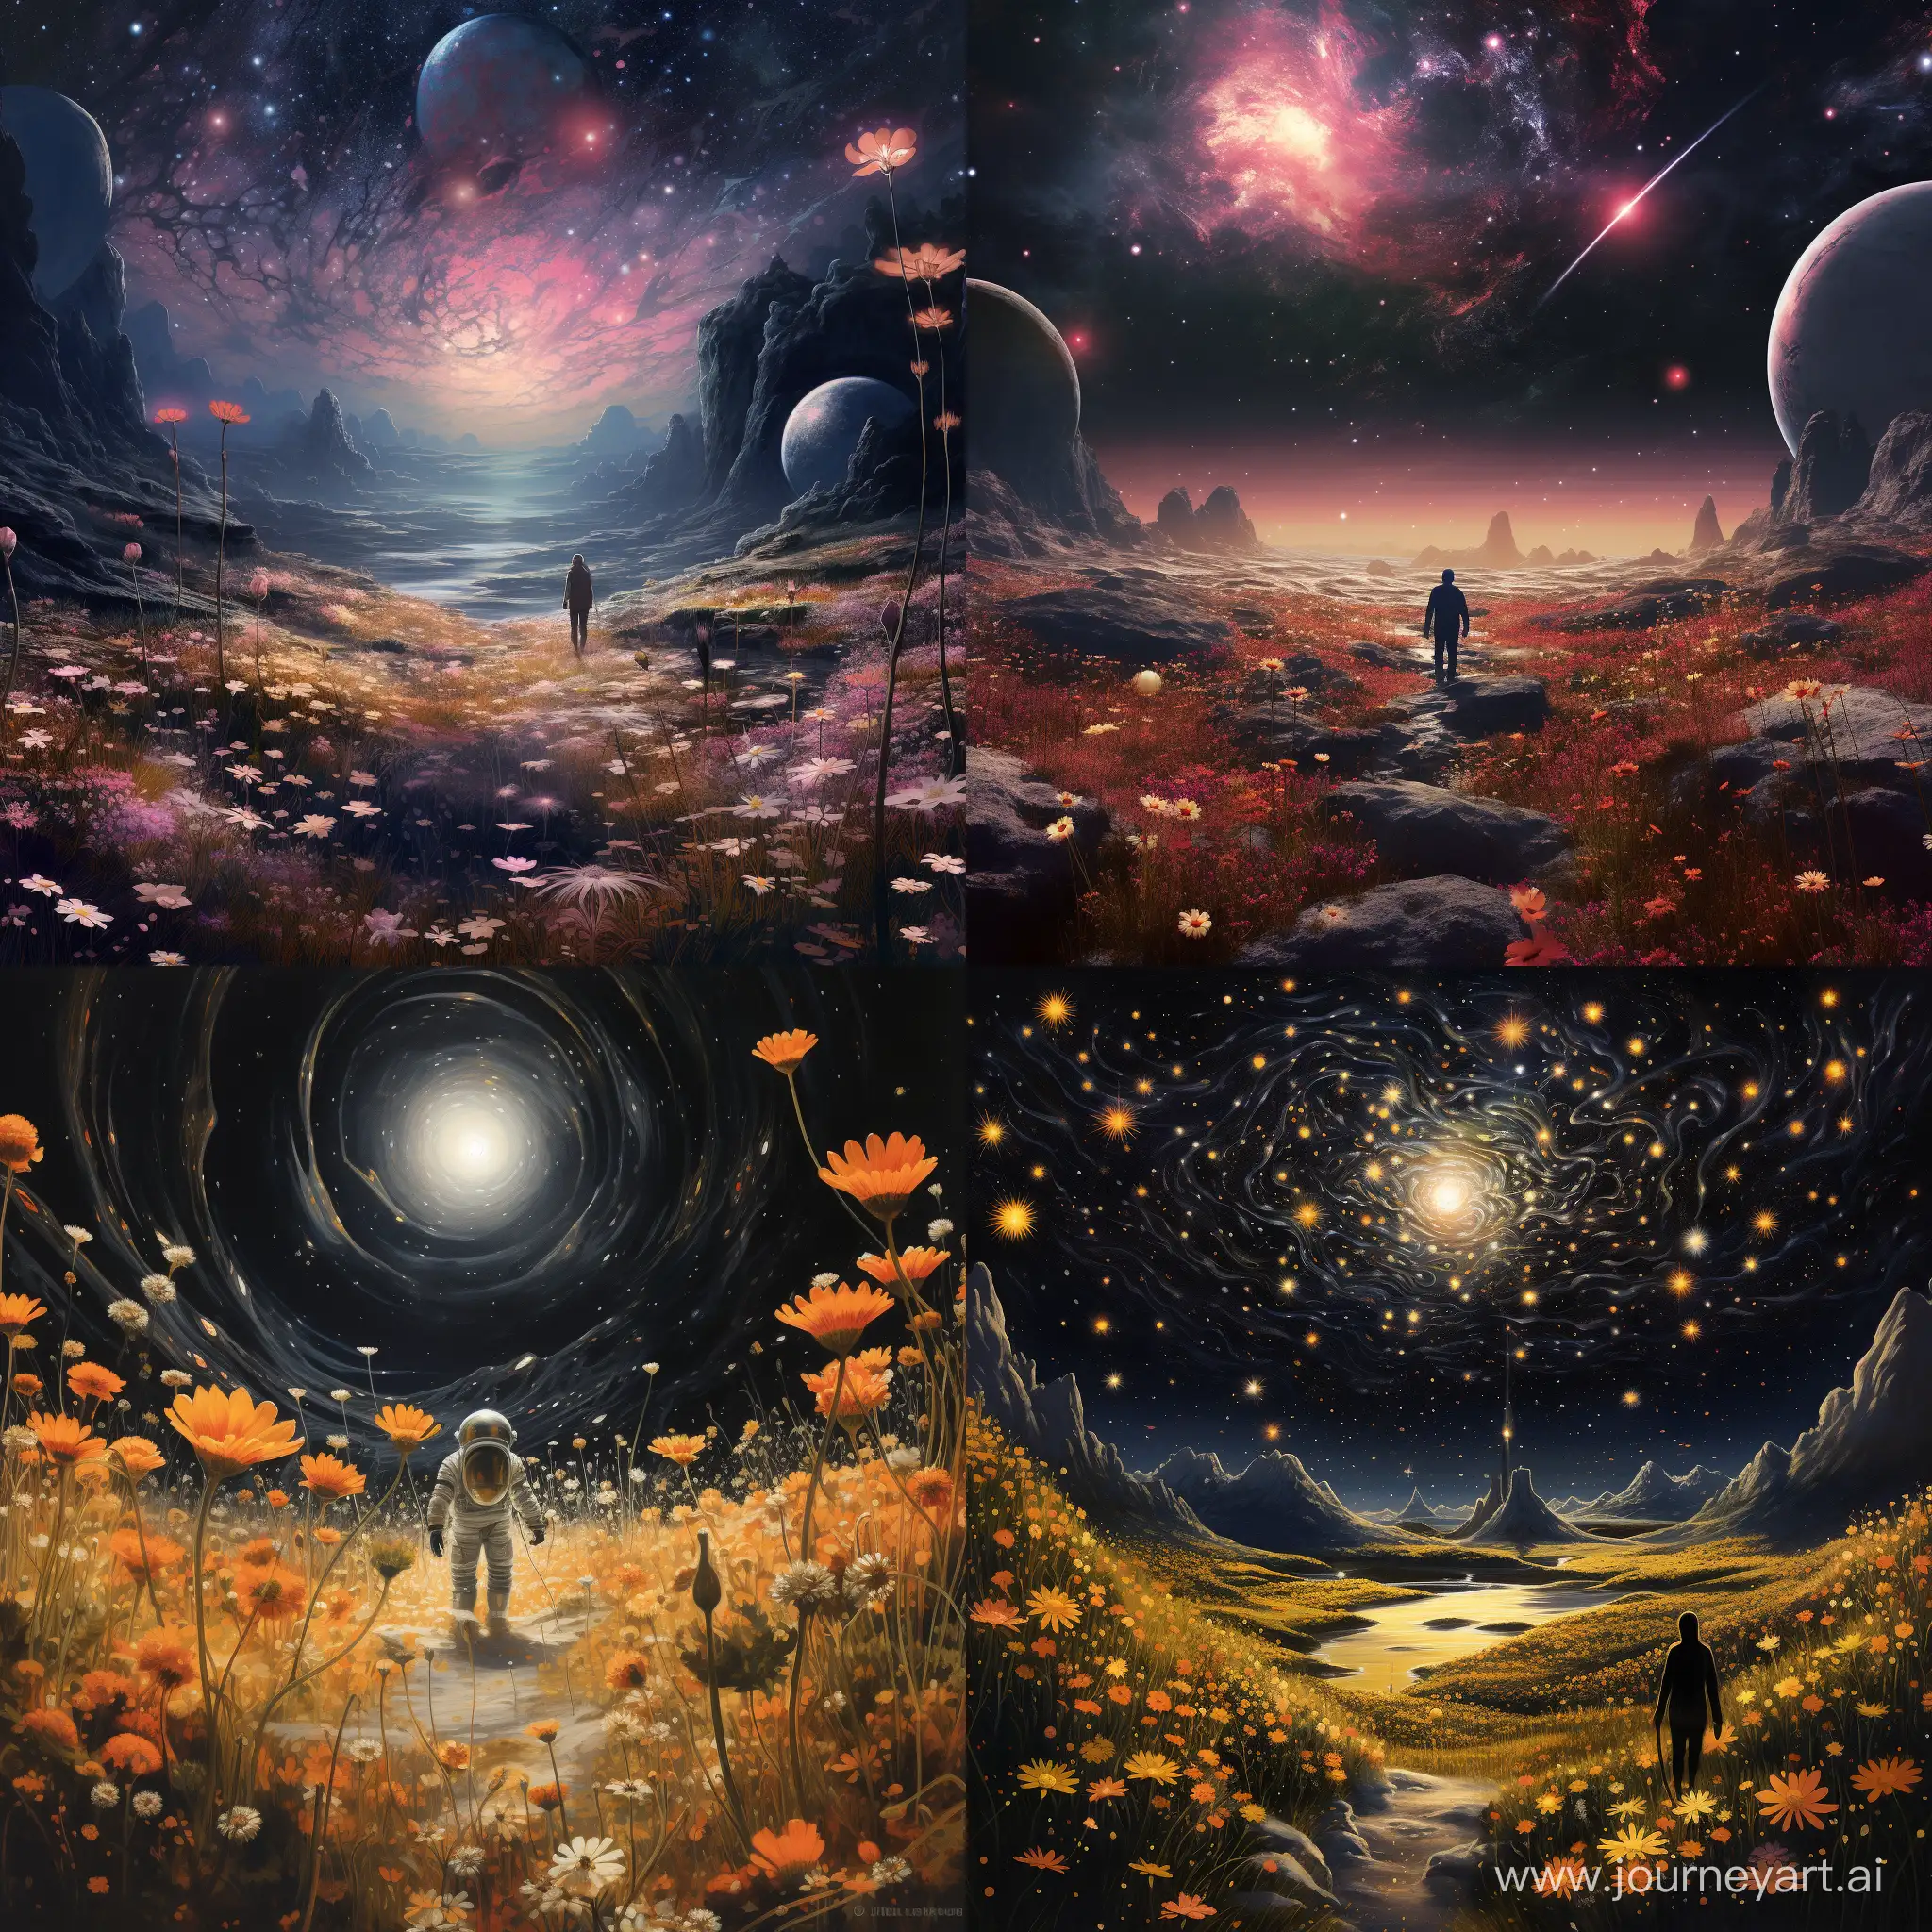 Starry-Cosmos-Art-A-Captivating-11-Aspect-Ratio-Masterpiece